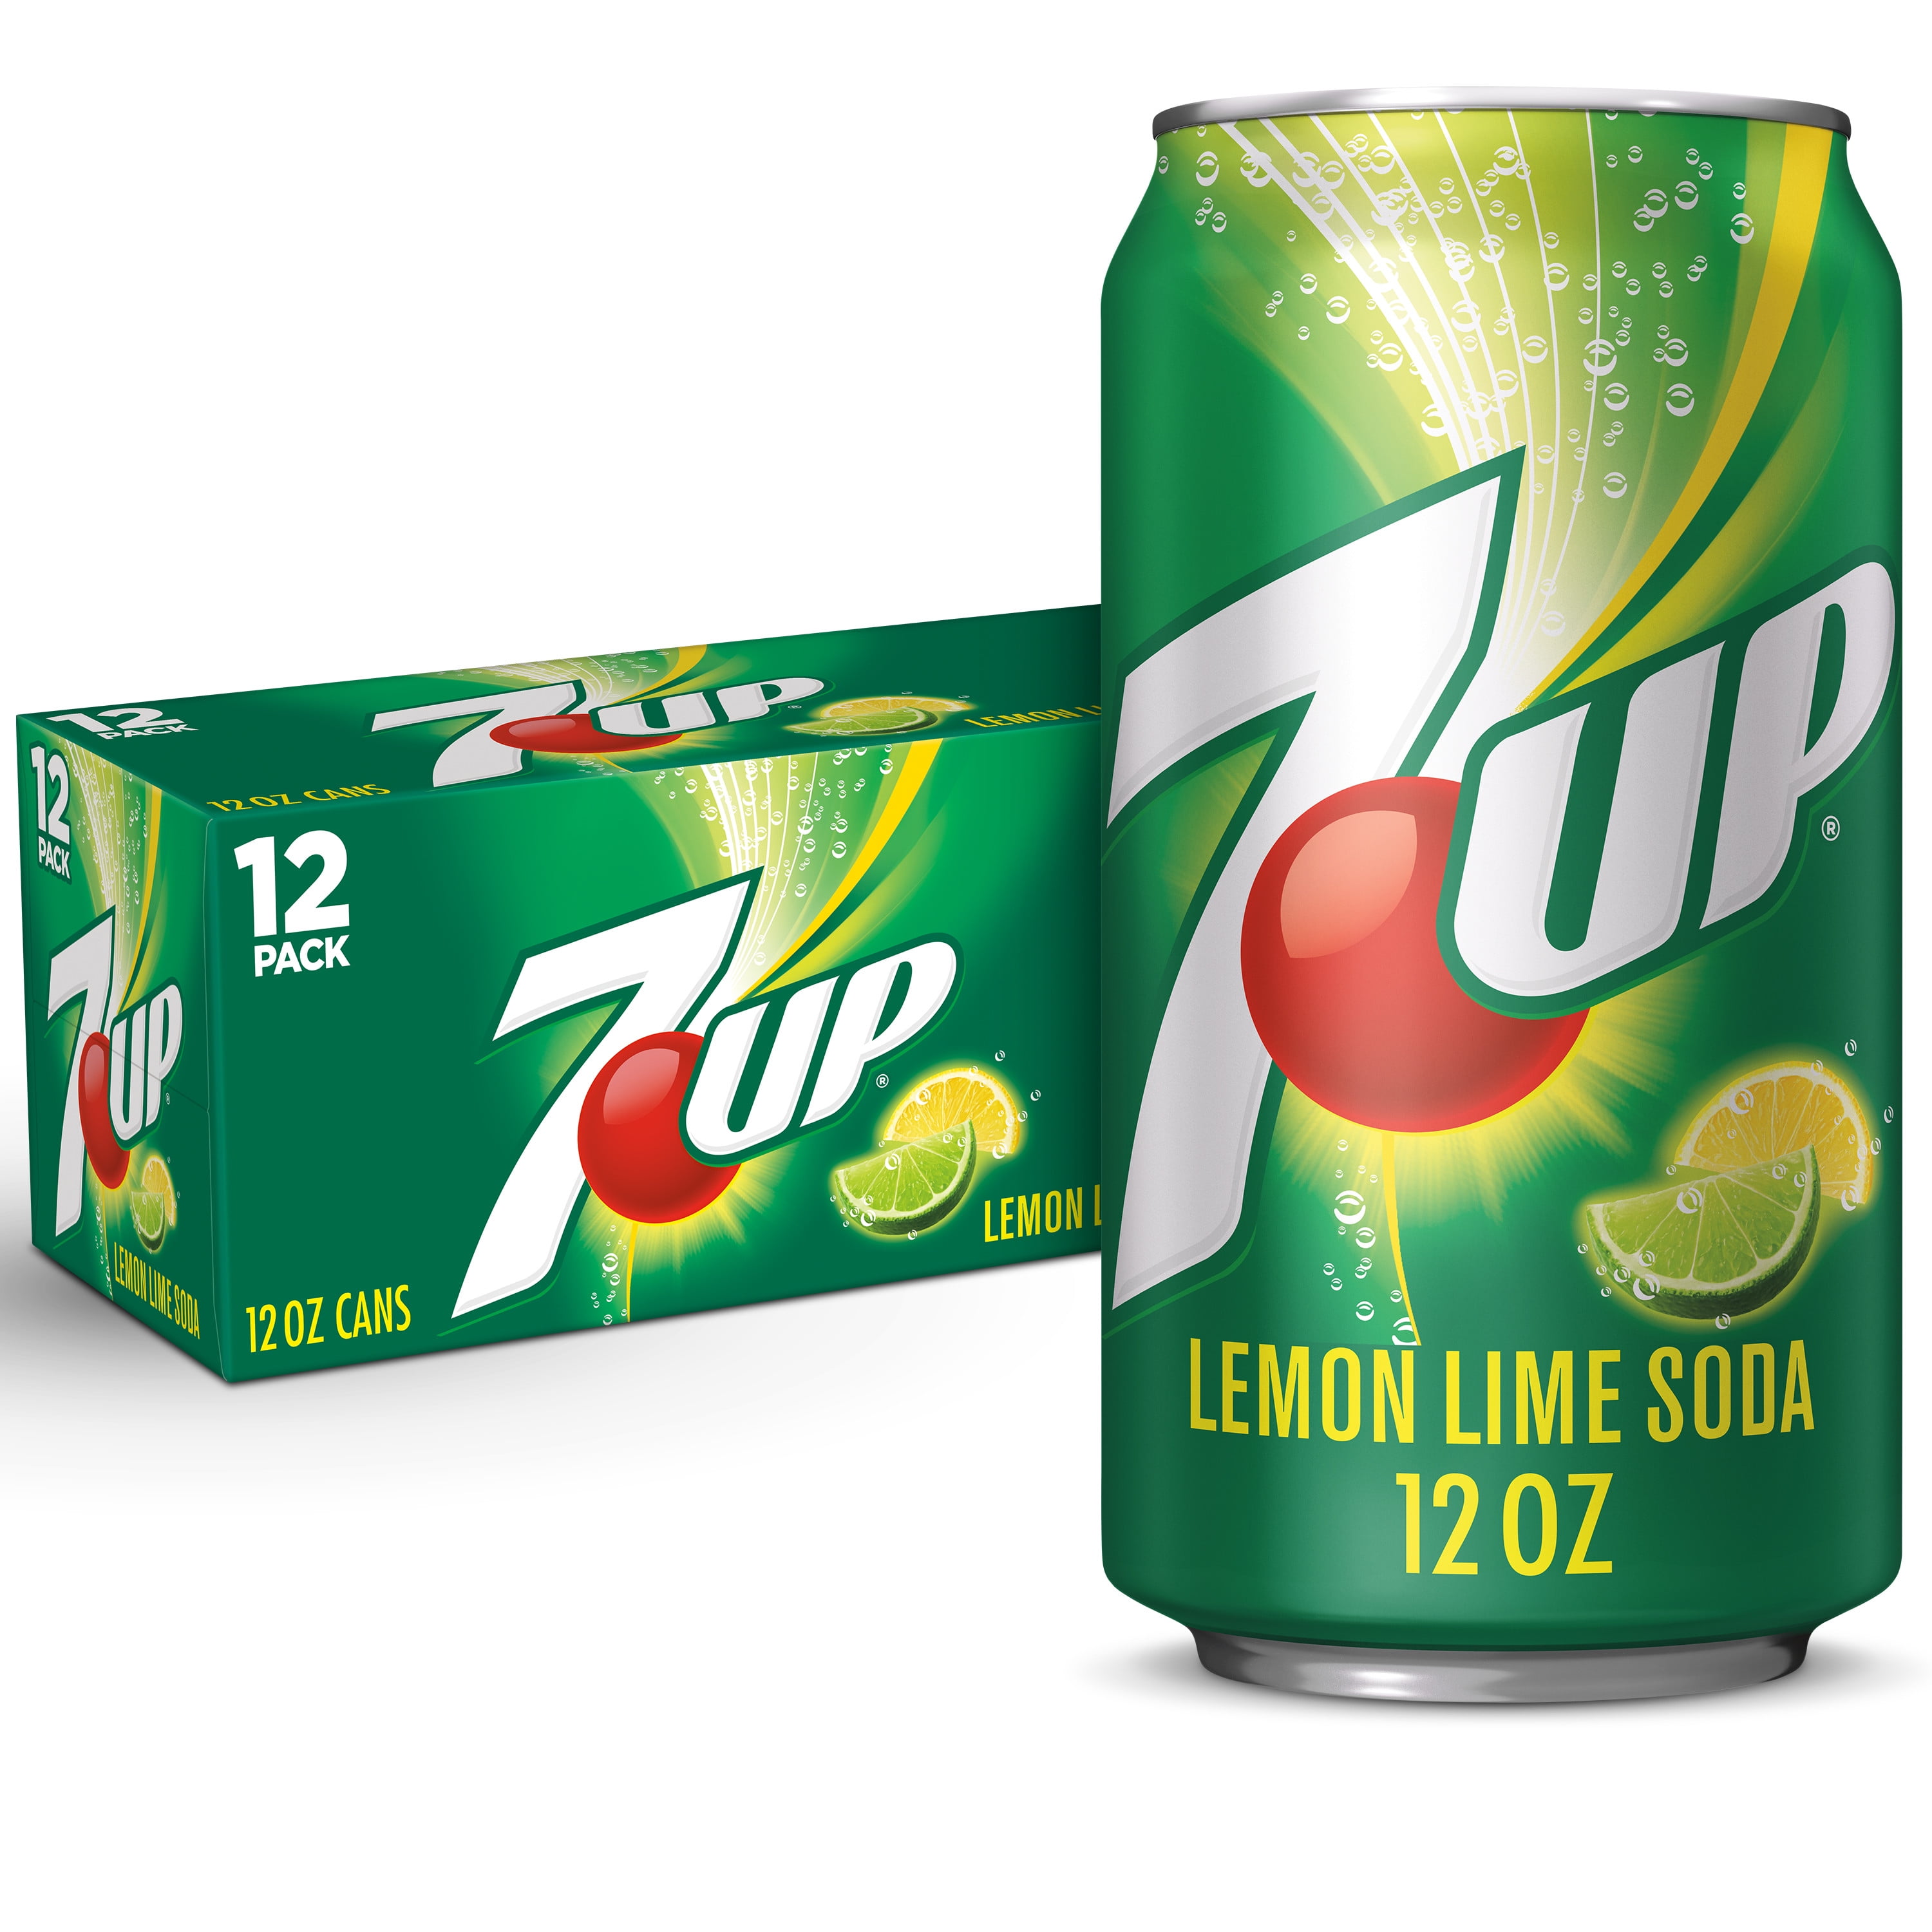 7Up Lemon Lime Soda Pop, 12 fl oz 12 Pack - Walmart.com